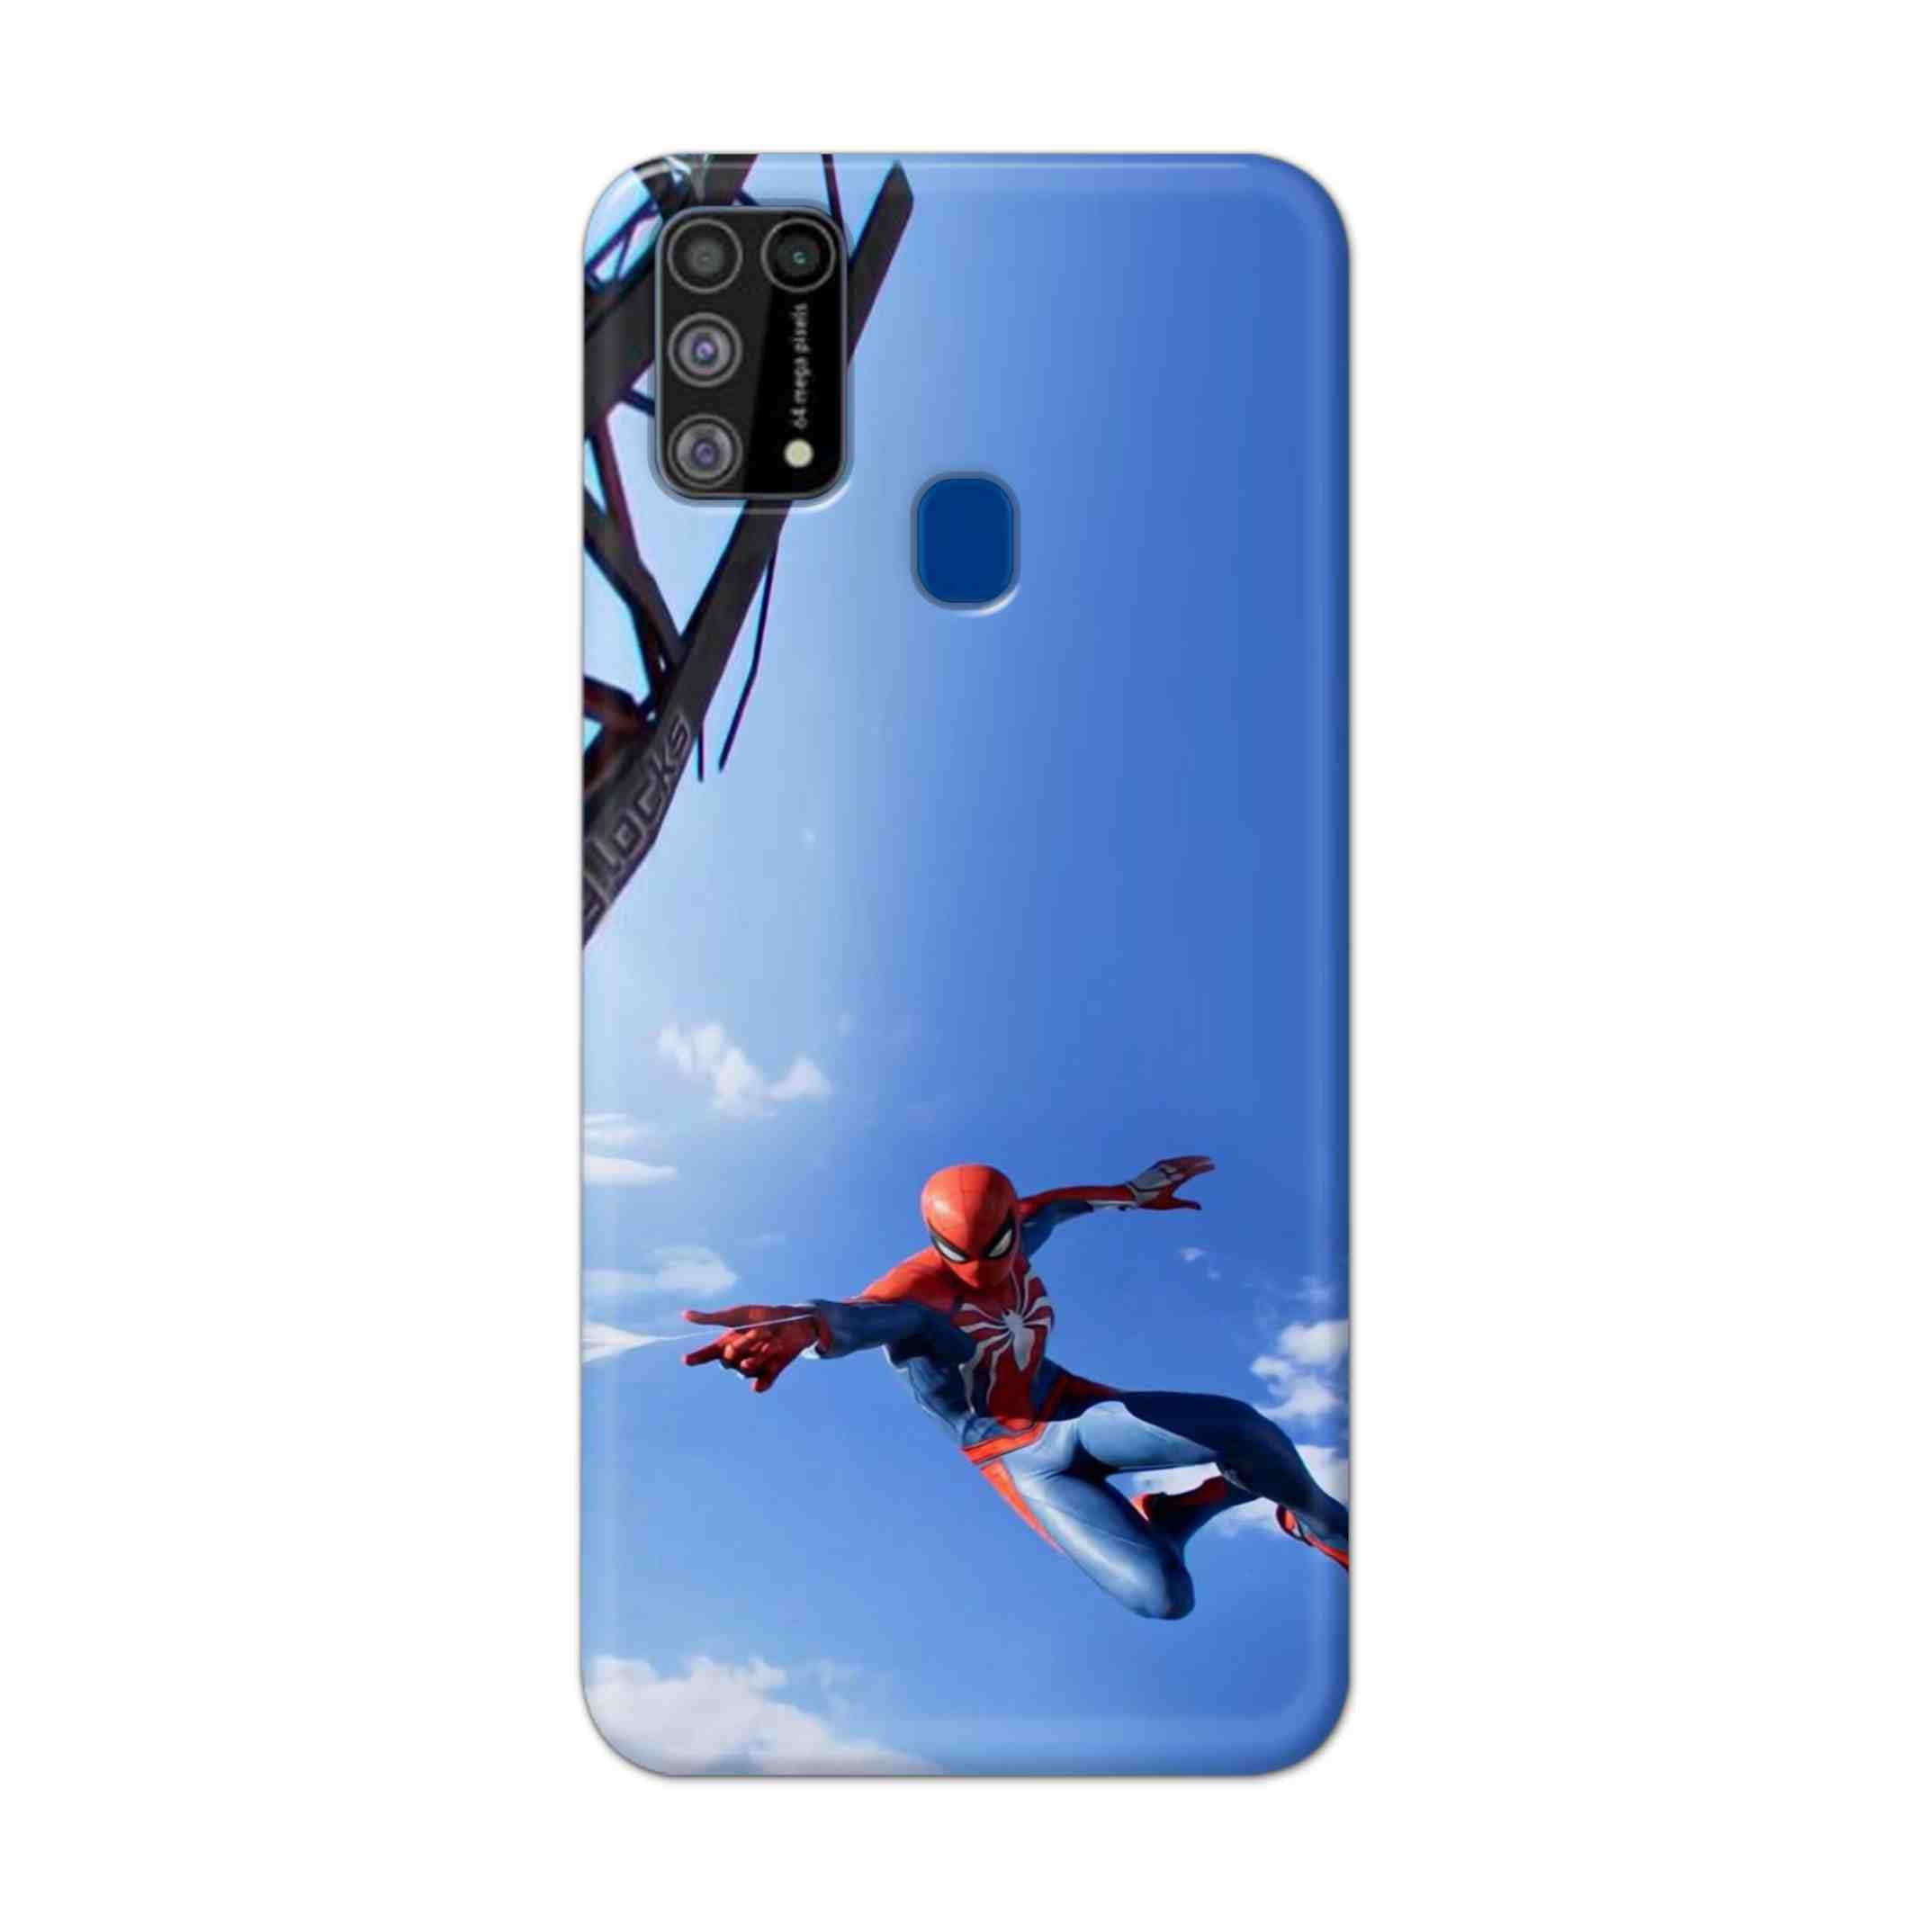 Buy Marvel Studio Spiderman Hard Back Mobile Phone Case Cover For Samsung Galaxy M31 Online